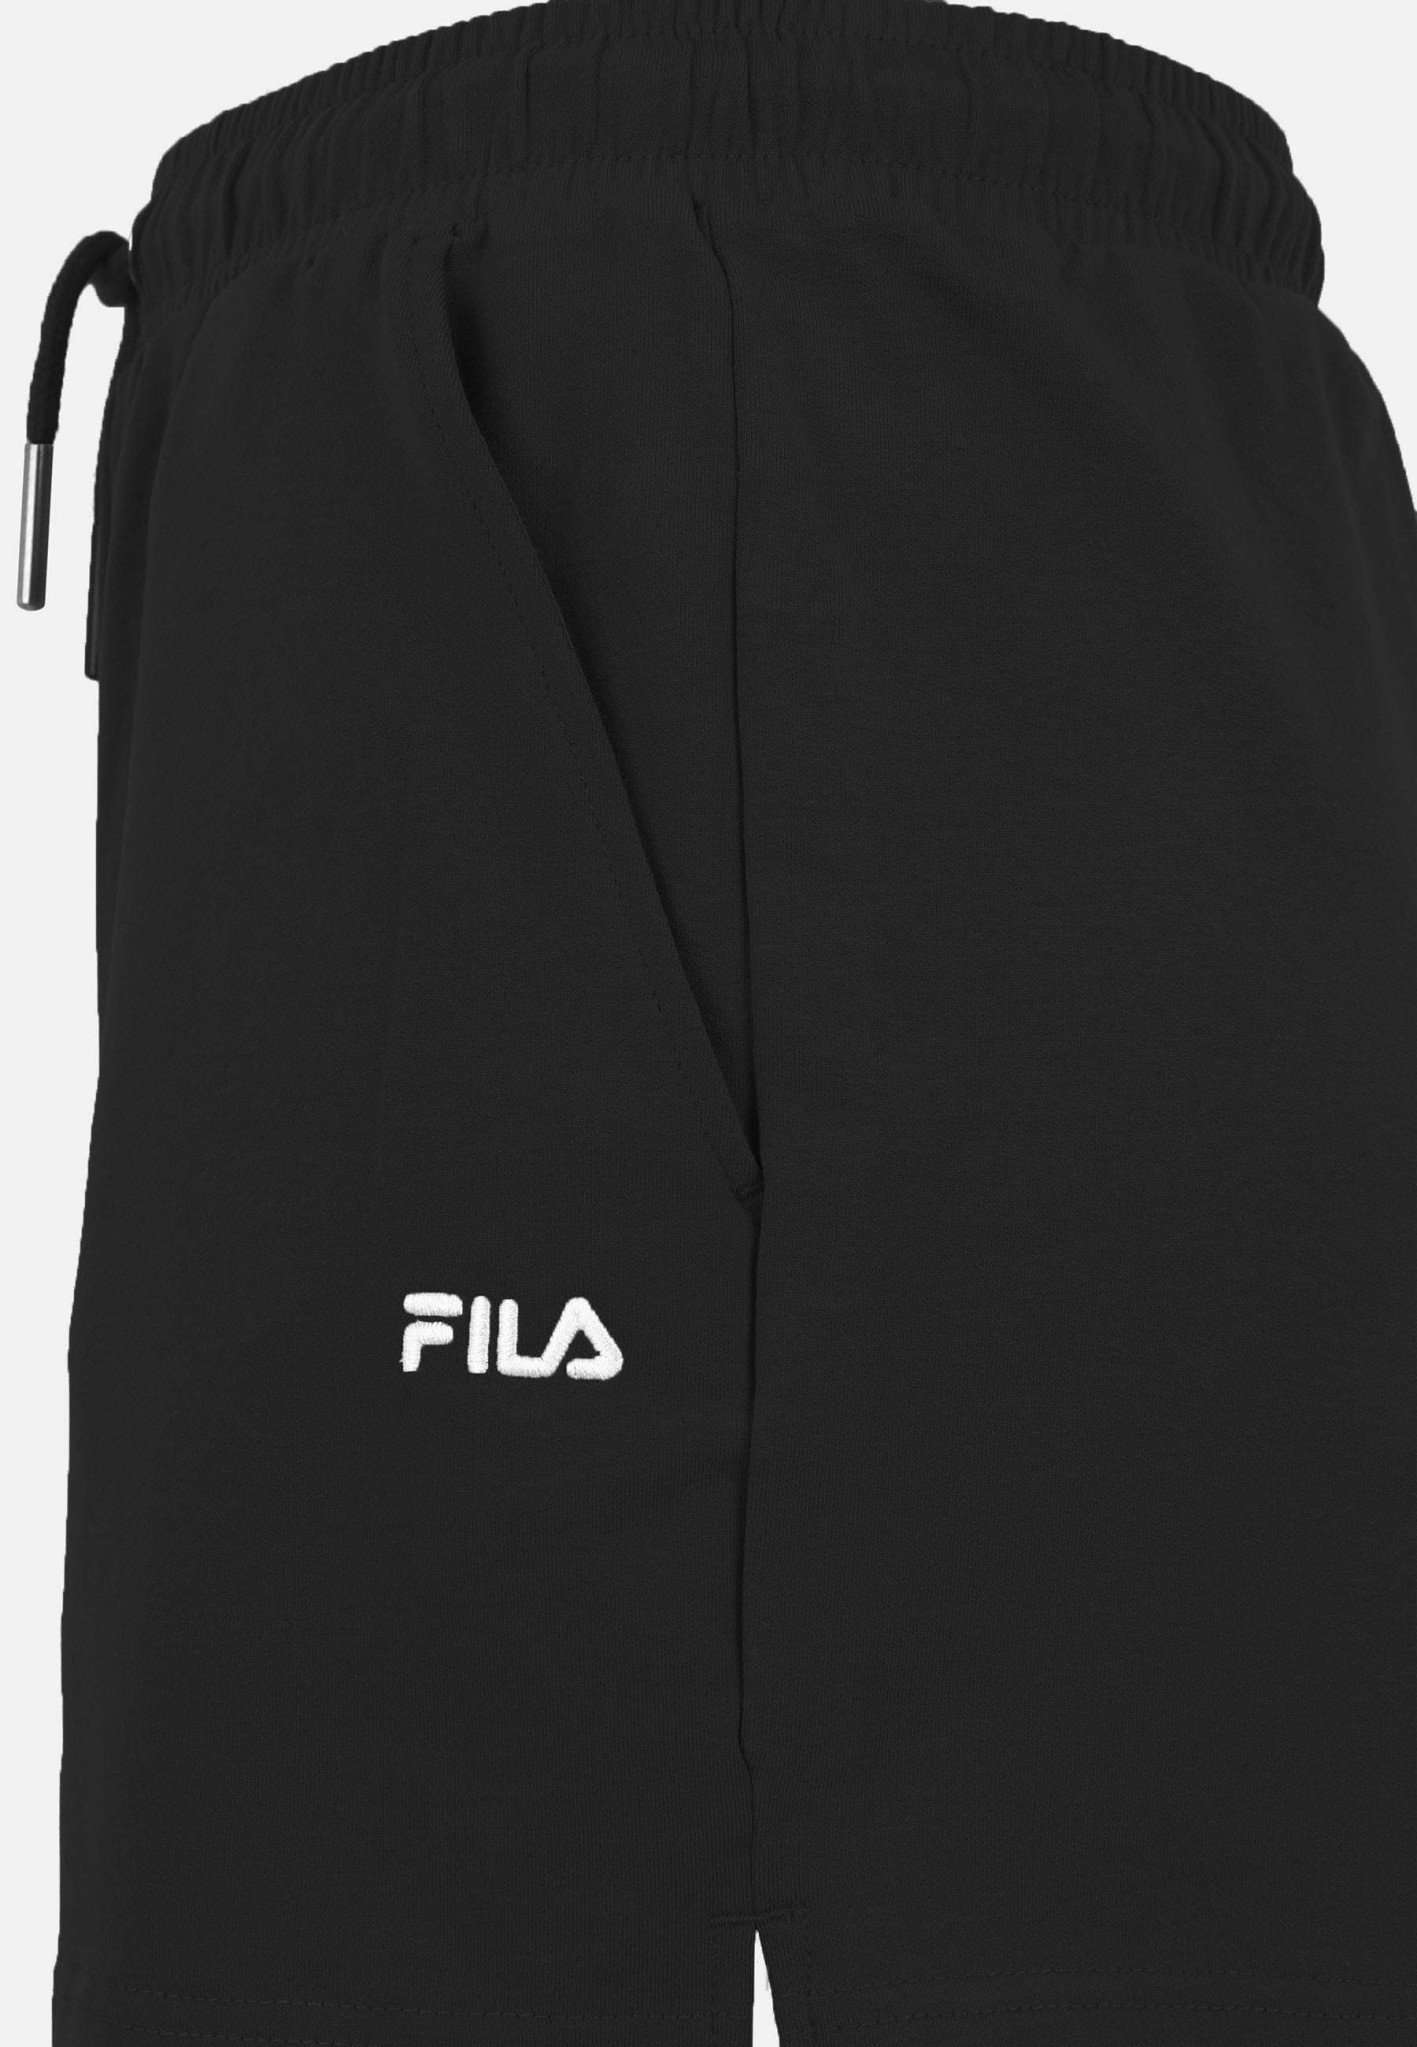 Brandenburg High Waist Shorts in Black Sweatshorts Fila   